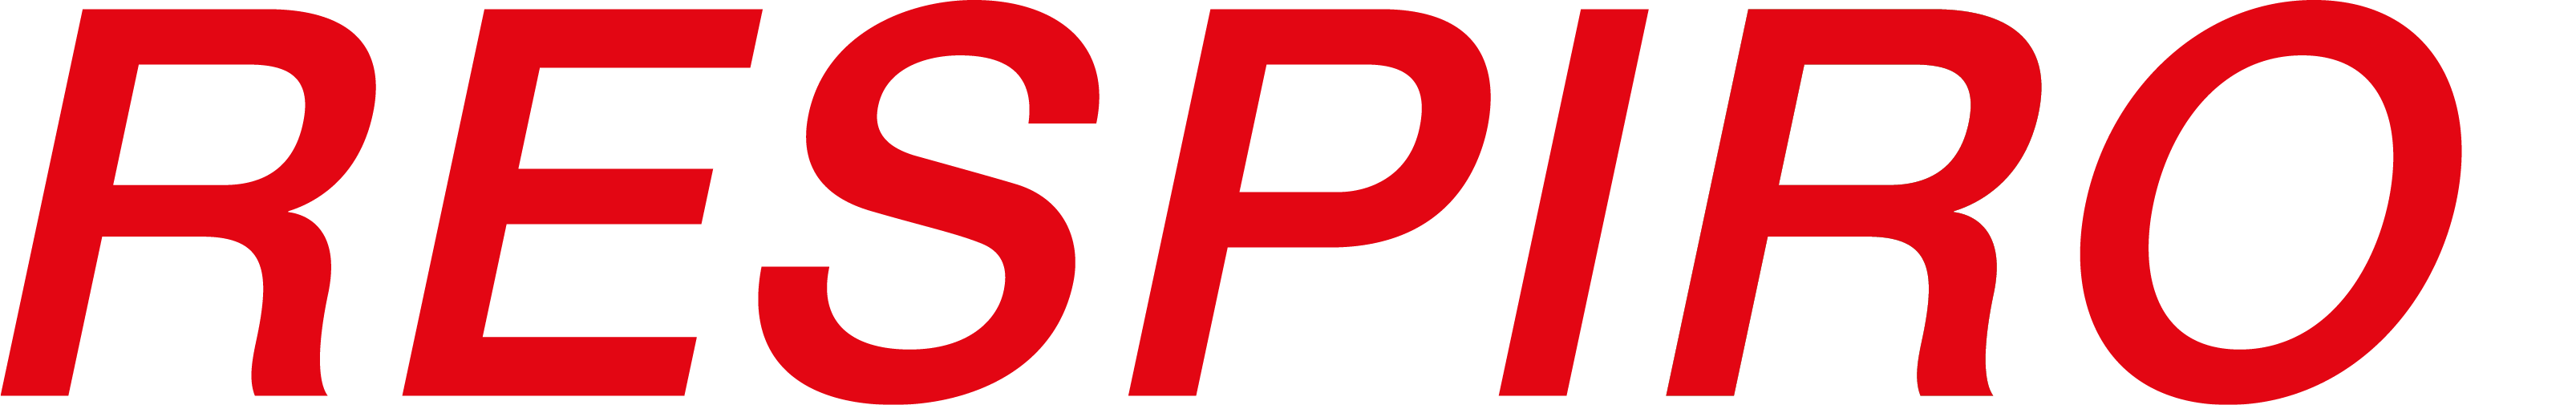 REITER RESPIRO Logo Download